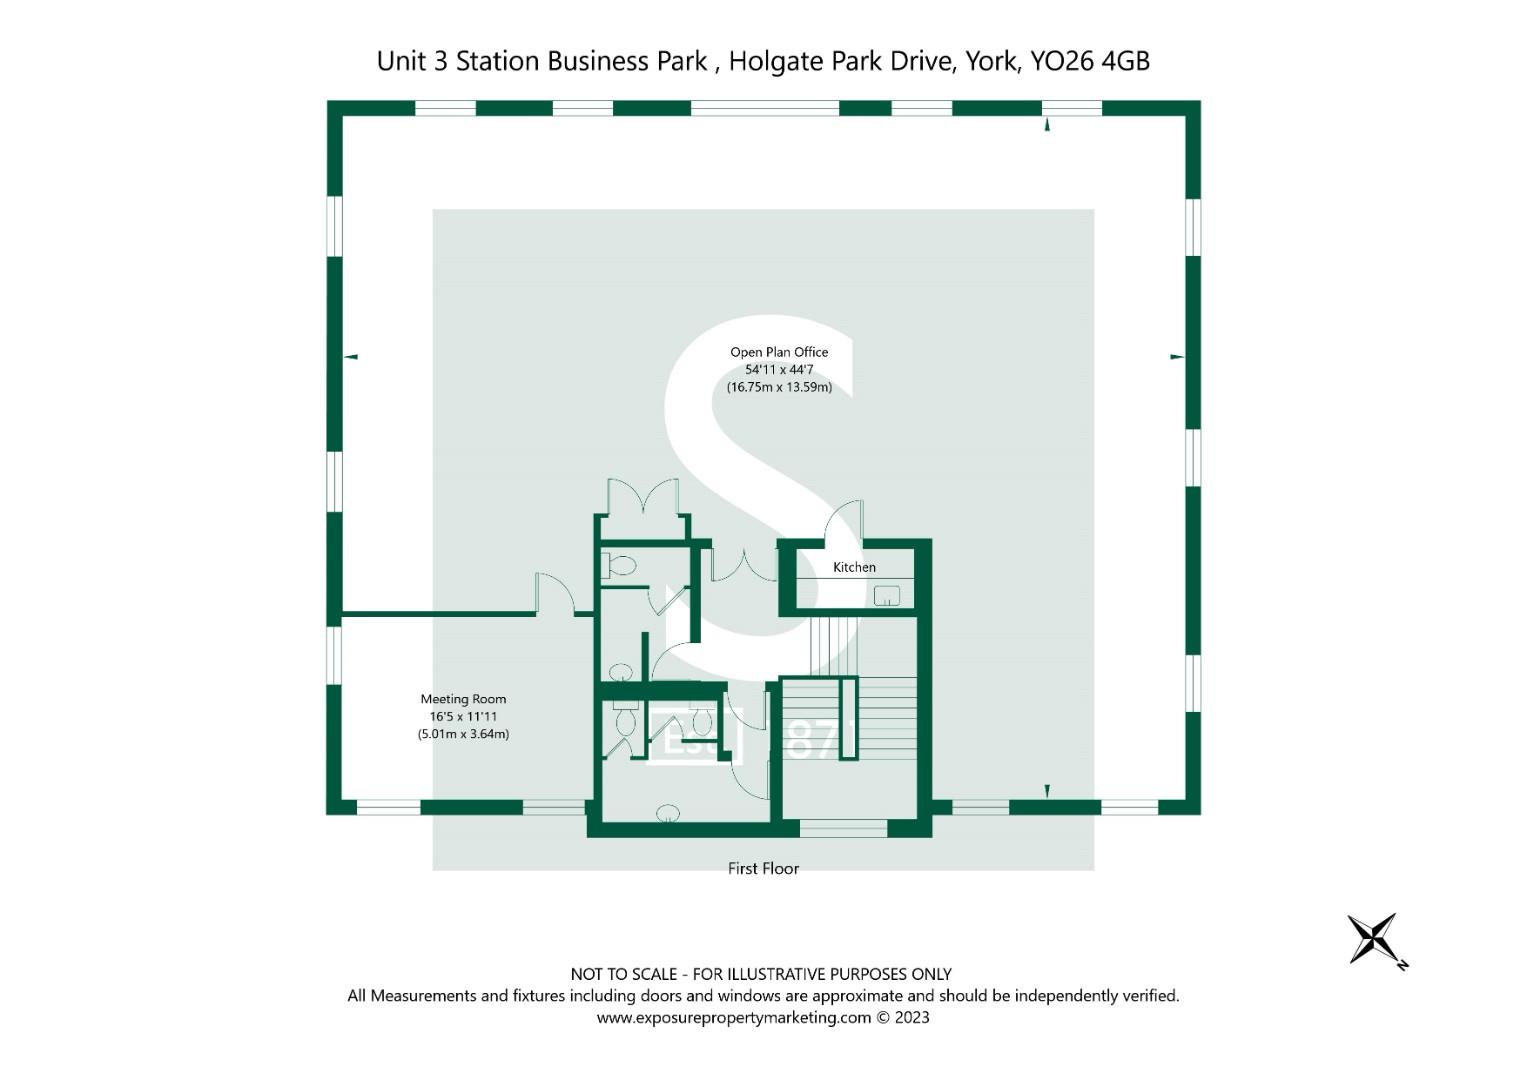 Holgate Park Drive First Floor, Striling House, Station Business Park York YO26 4GB